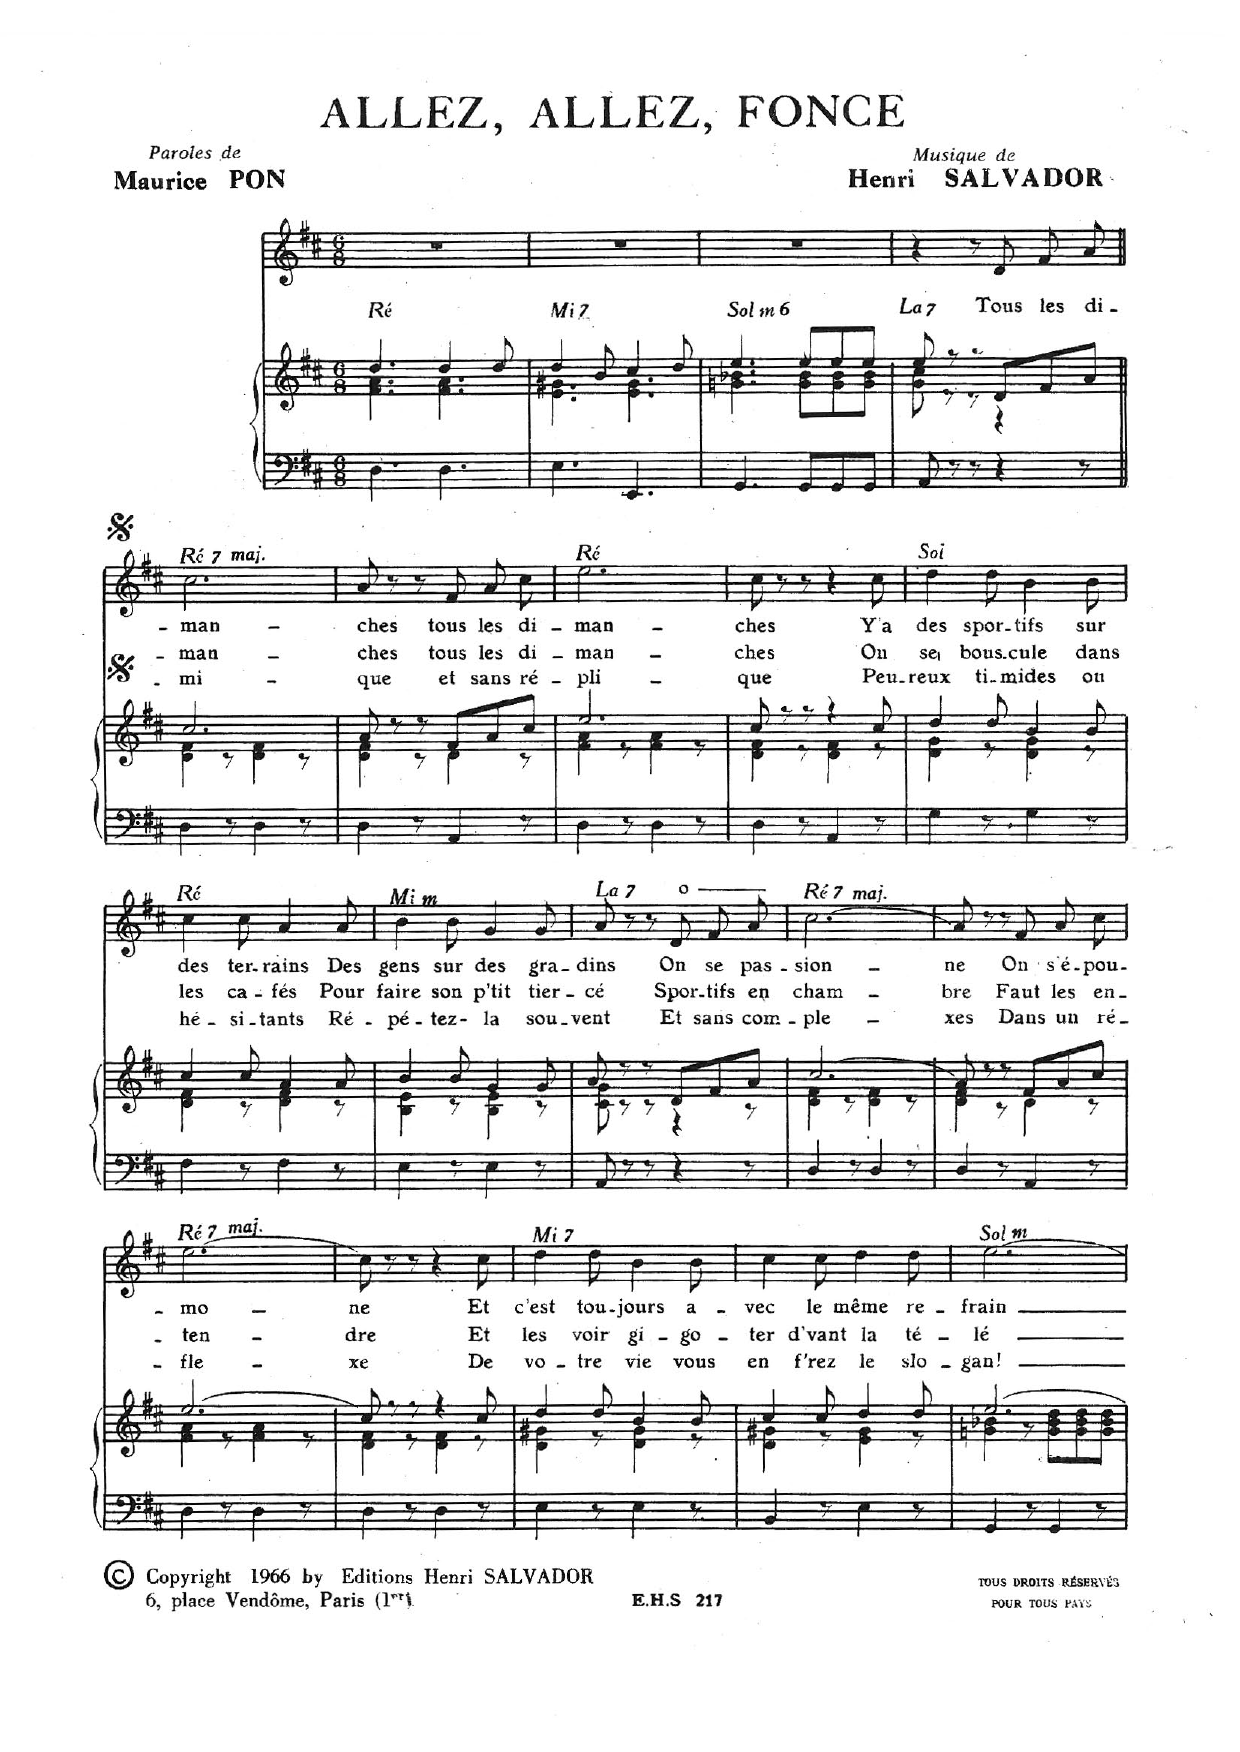 Henri Salvador Allez Allez Fonce Sheet Music Notes & Chords for Piano & Vocal - Download or Print PDF